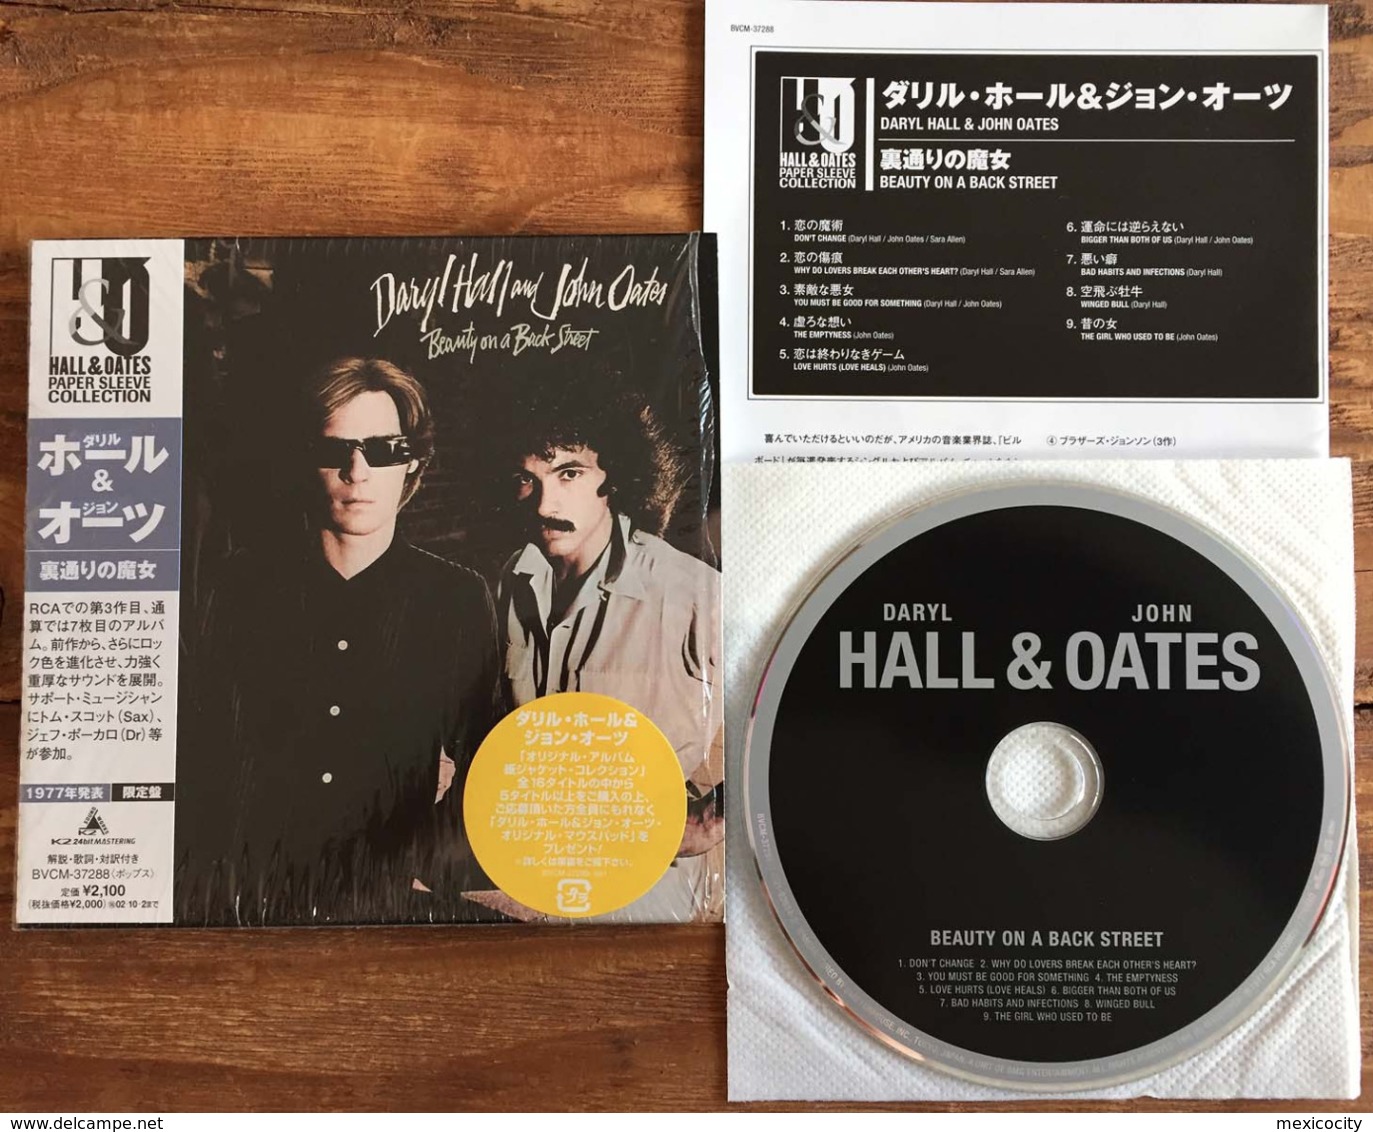 DARYL HALL JOHN OATES BEAUTY ON A BACK STREET Japanese CD Mini Sleeve W/ Inserts K2 Master RCA /BMG Japan See Imgs. Rare - Soul - R&B